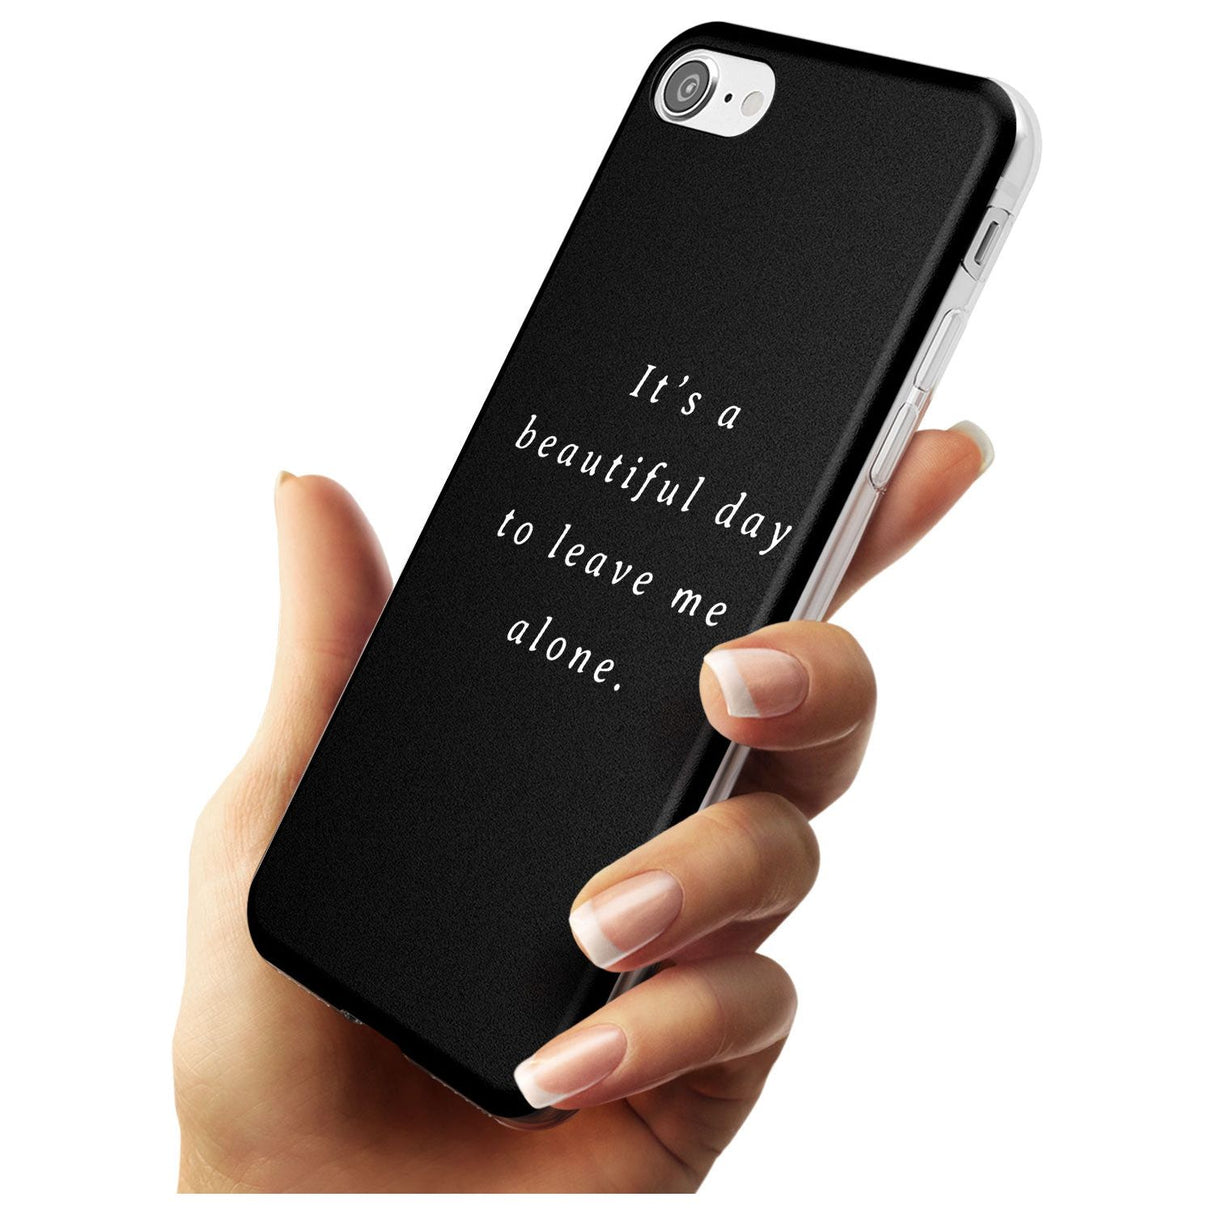 Leave me alone Slim TPU Phone Case for iPhone SE 8 7 Plus